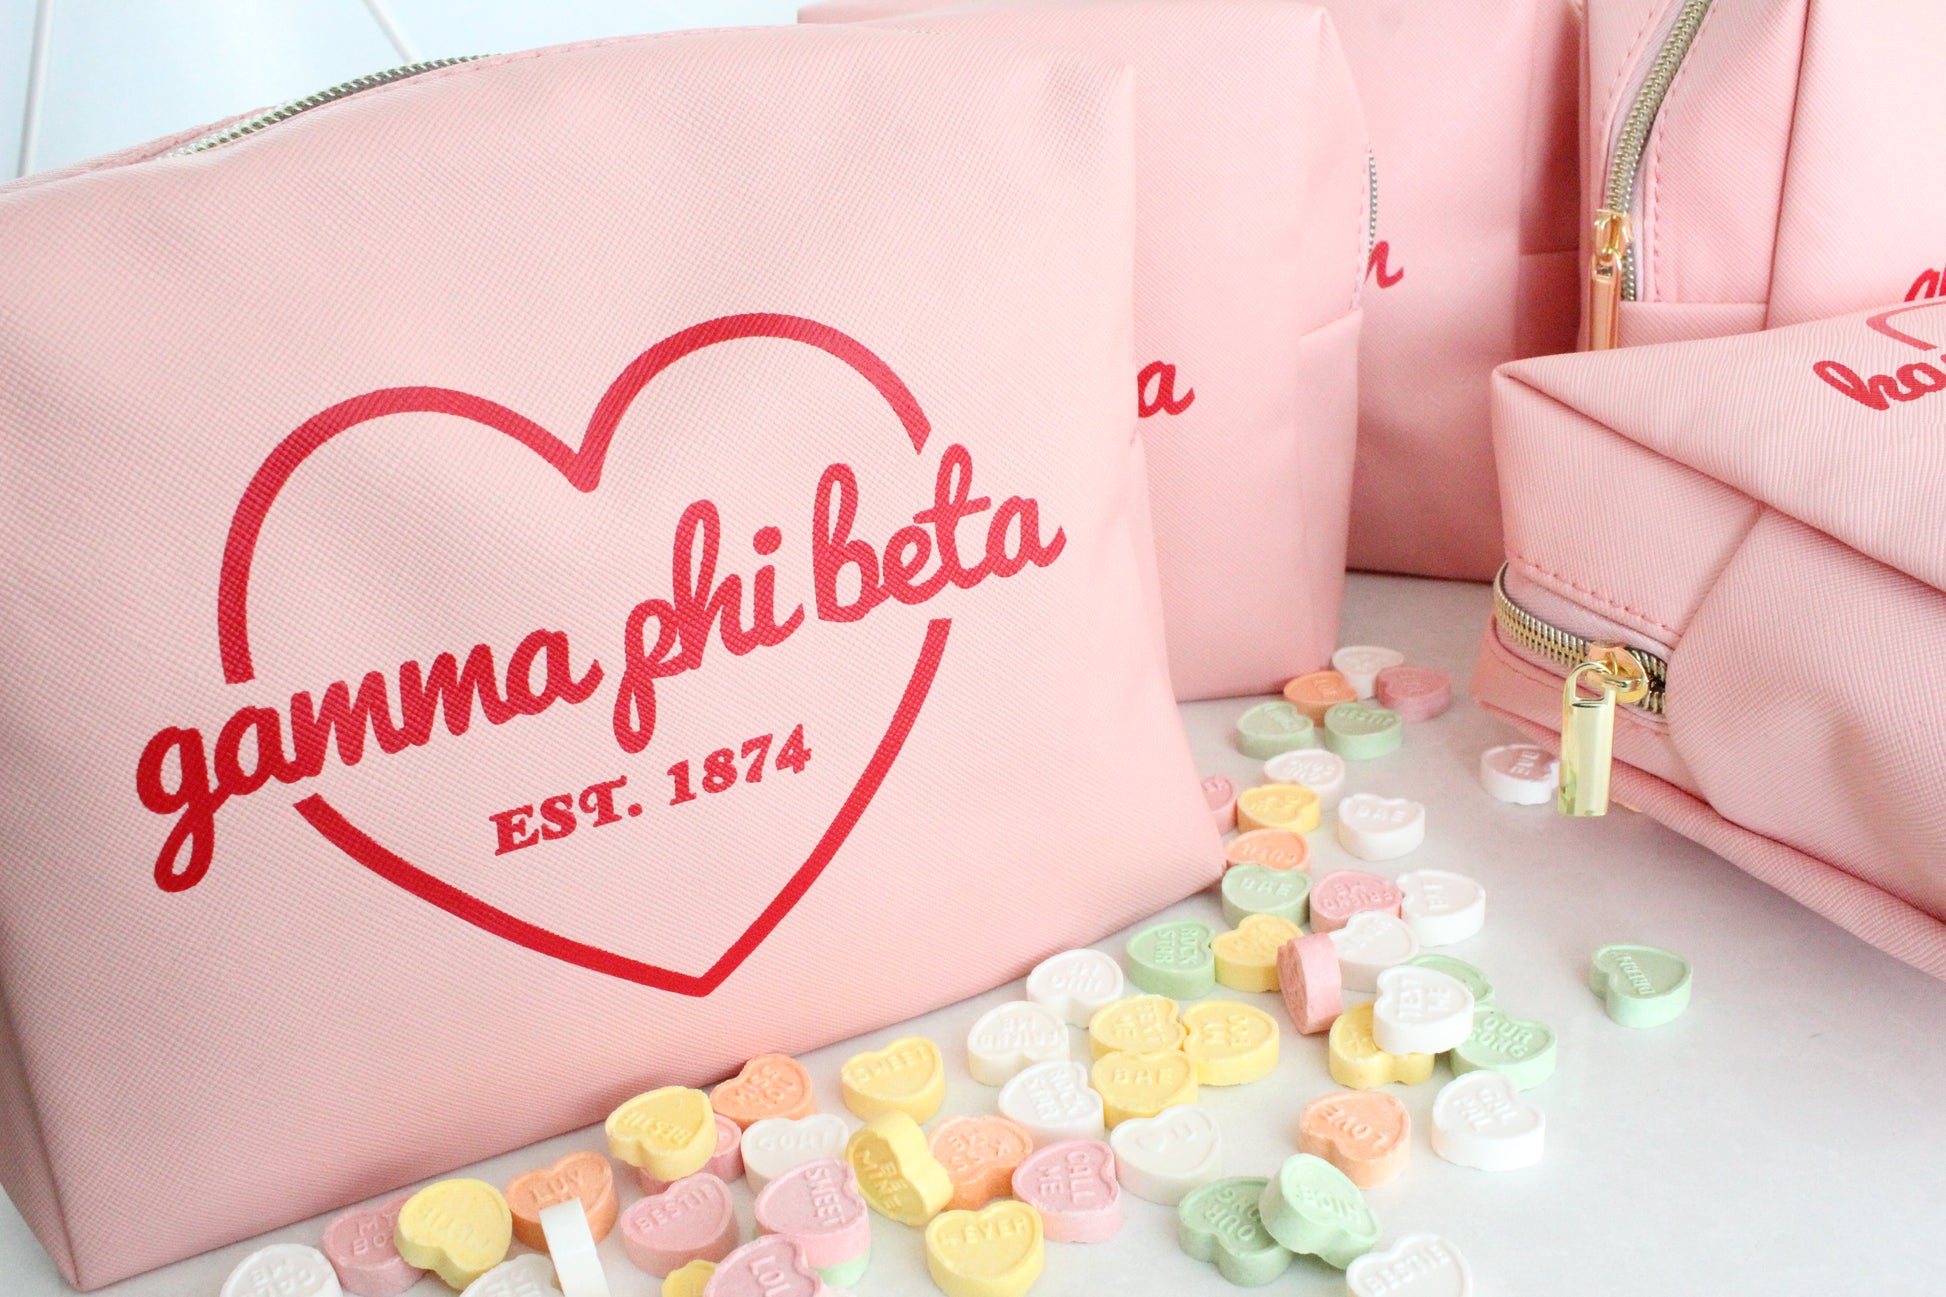 Gamma Phi Beta Pink w/Red Heart Makeup Bag - Virginia Book Company